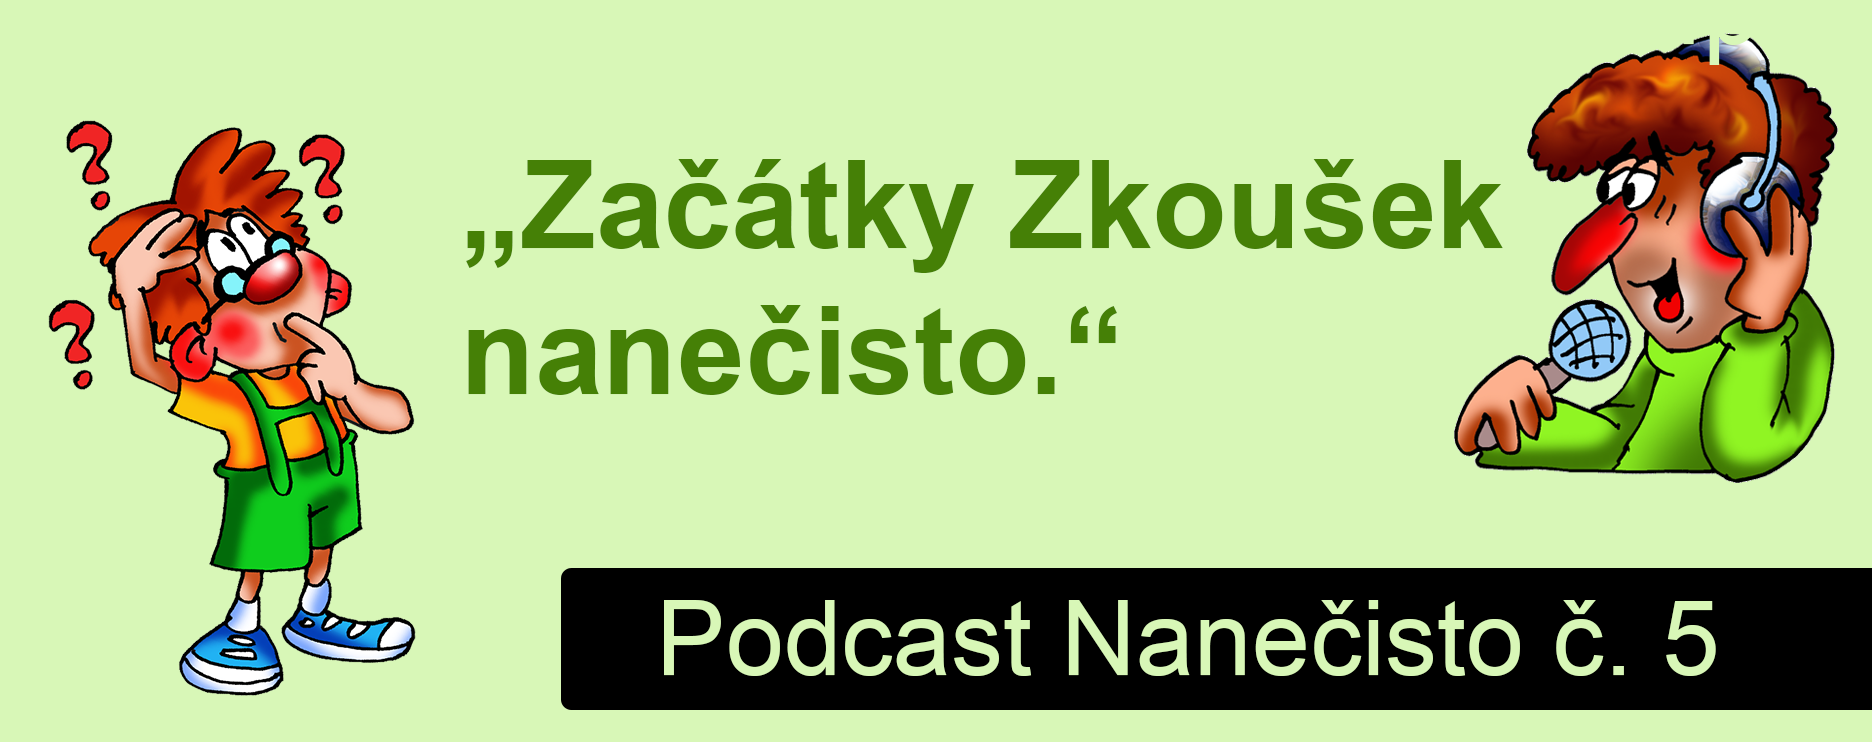 Podcast Nanečisto 5. epizoda